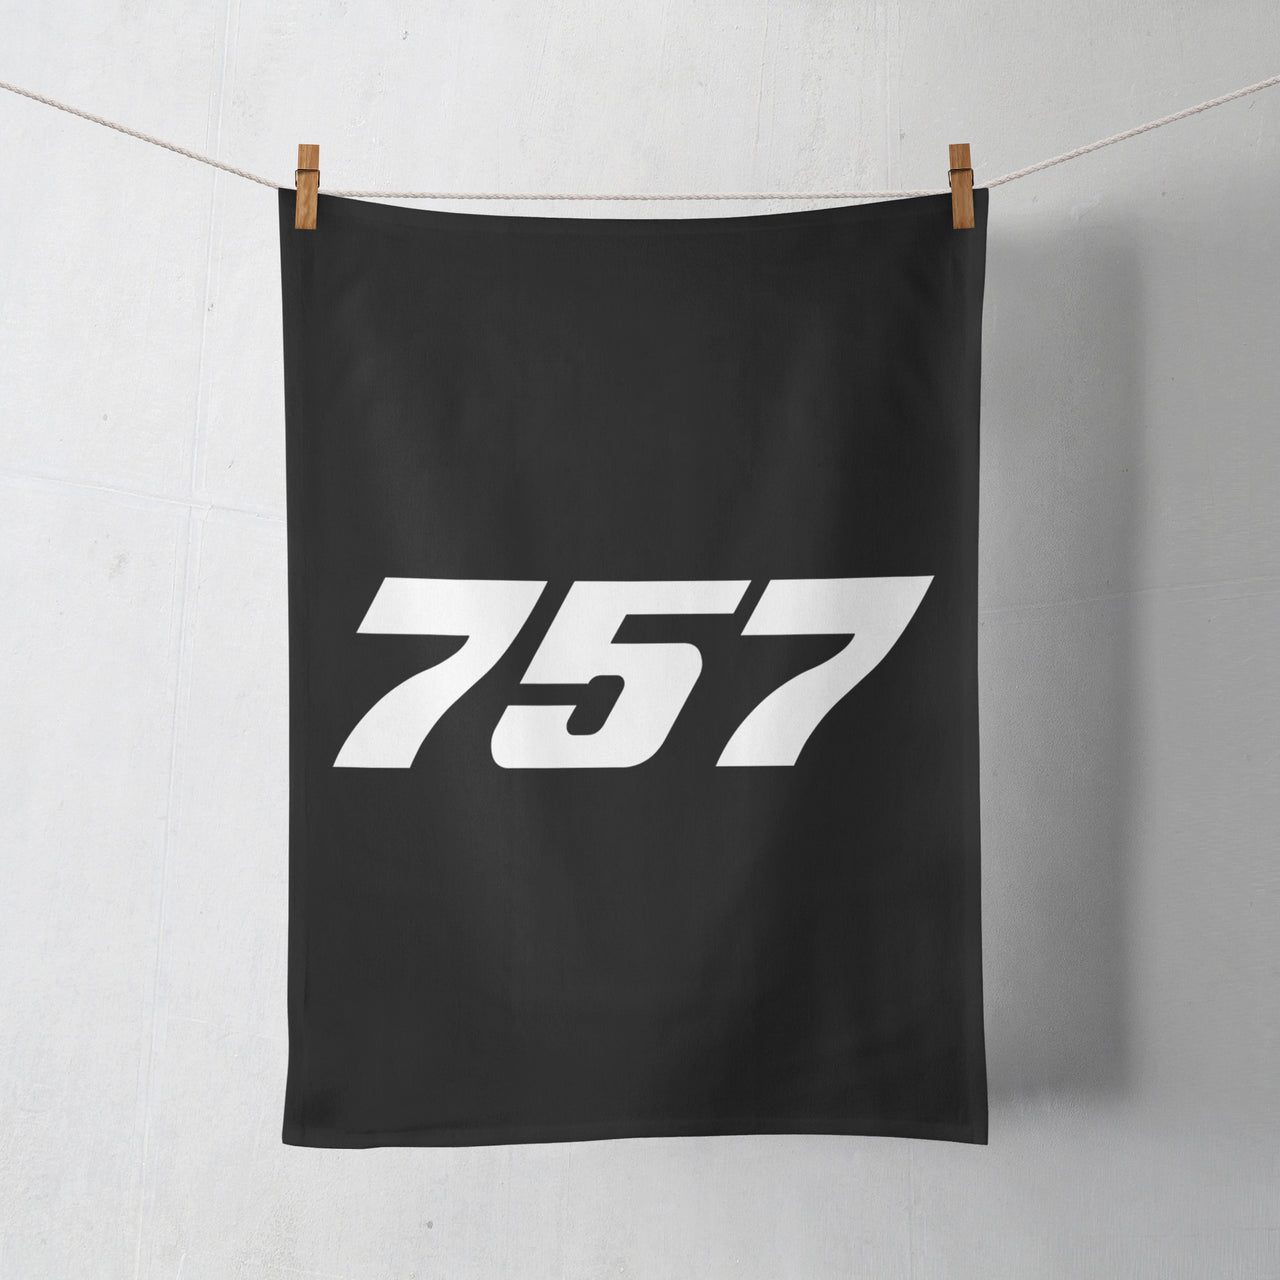 757 Flat Text Designed Towels